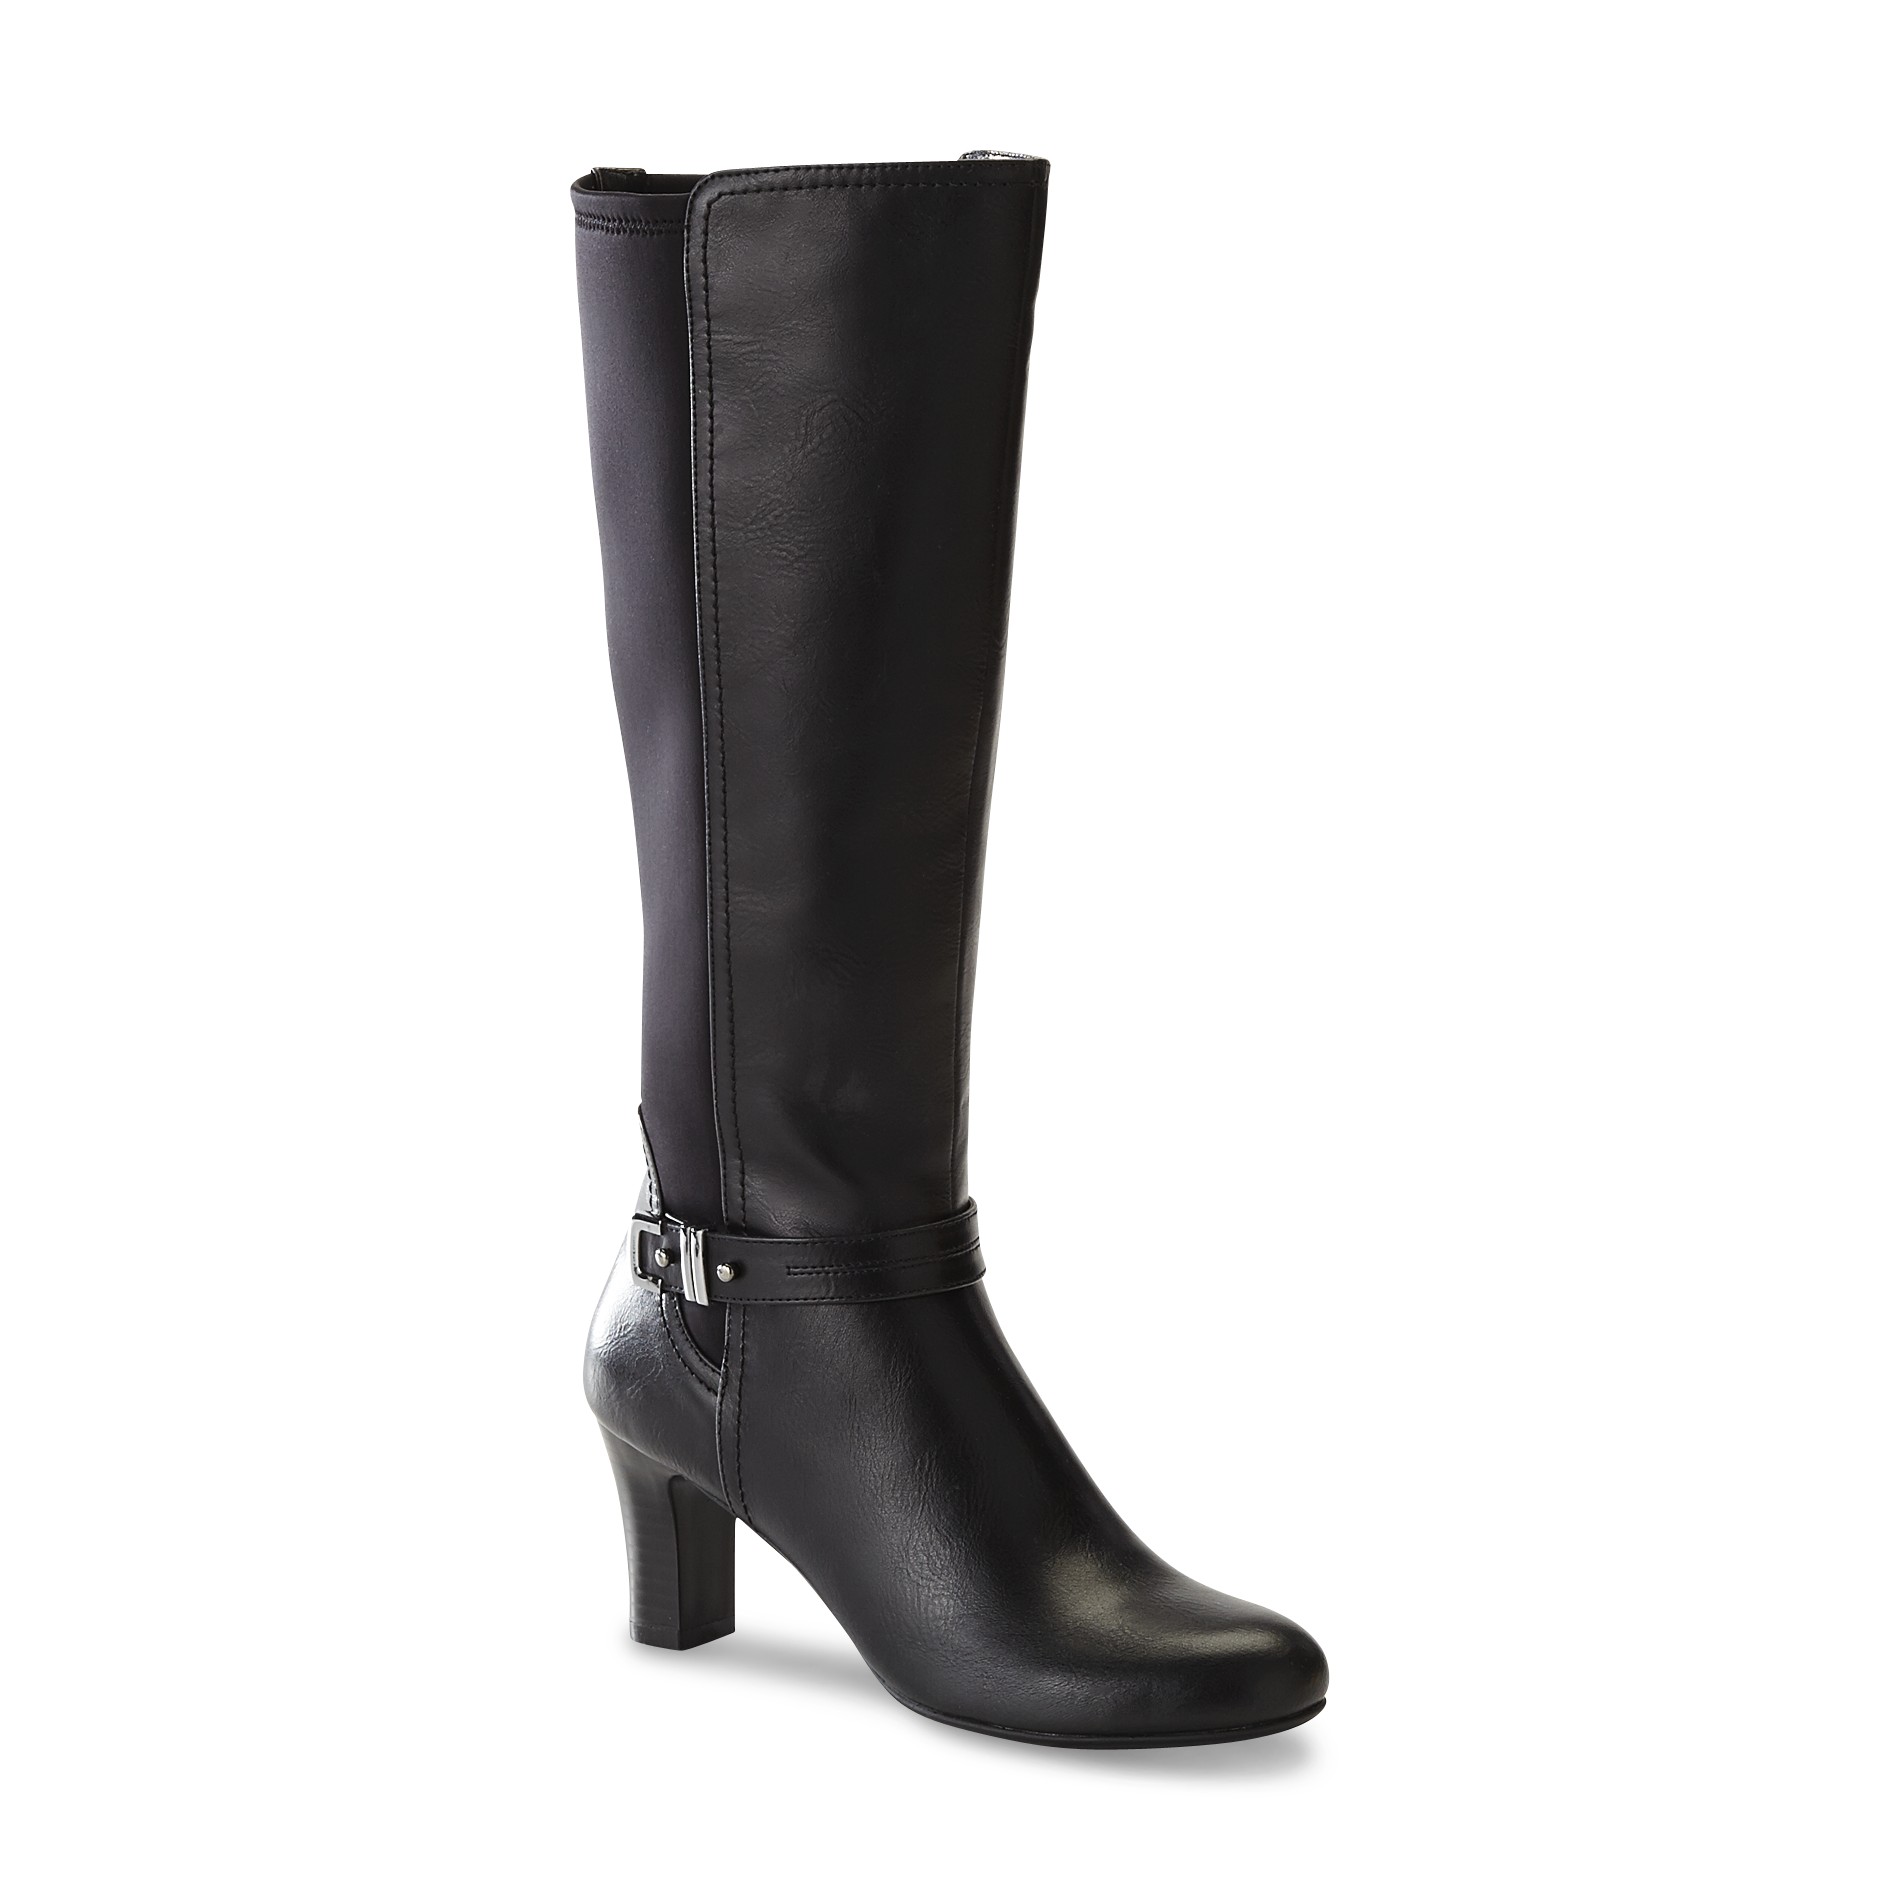 Madeline Women's Syble 13-1/2 Black High-Heel Fashion Boot